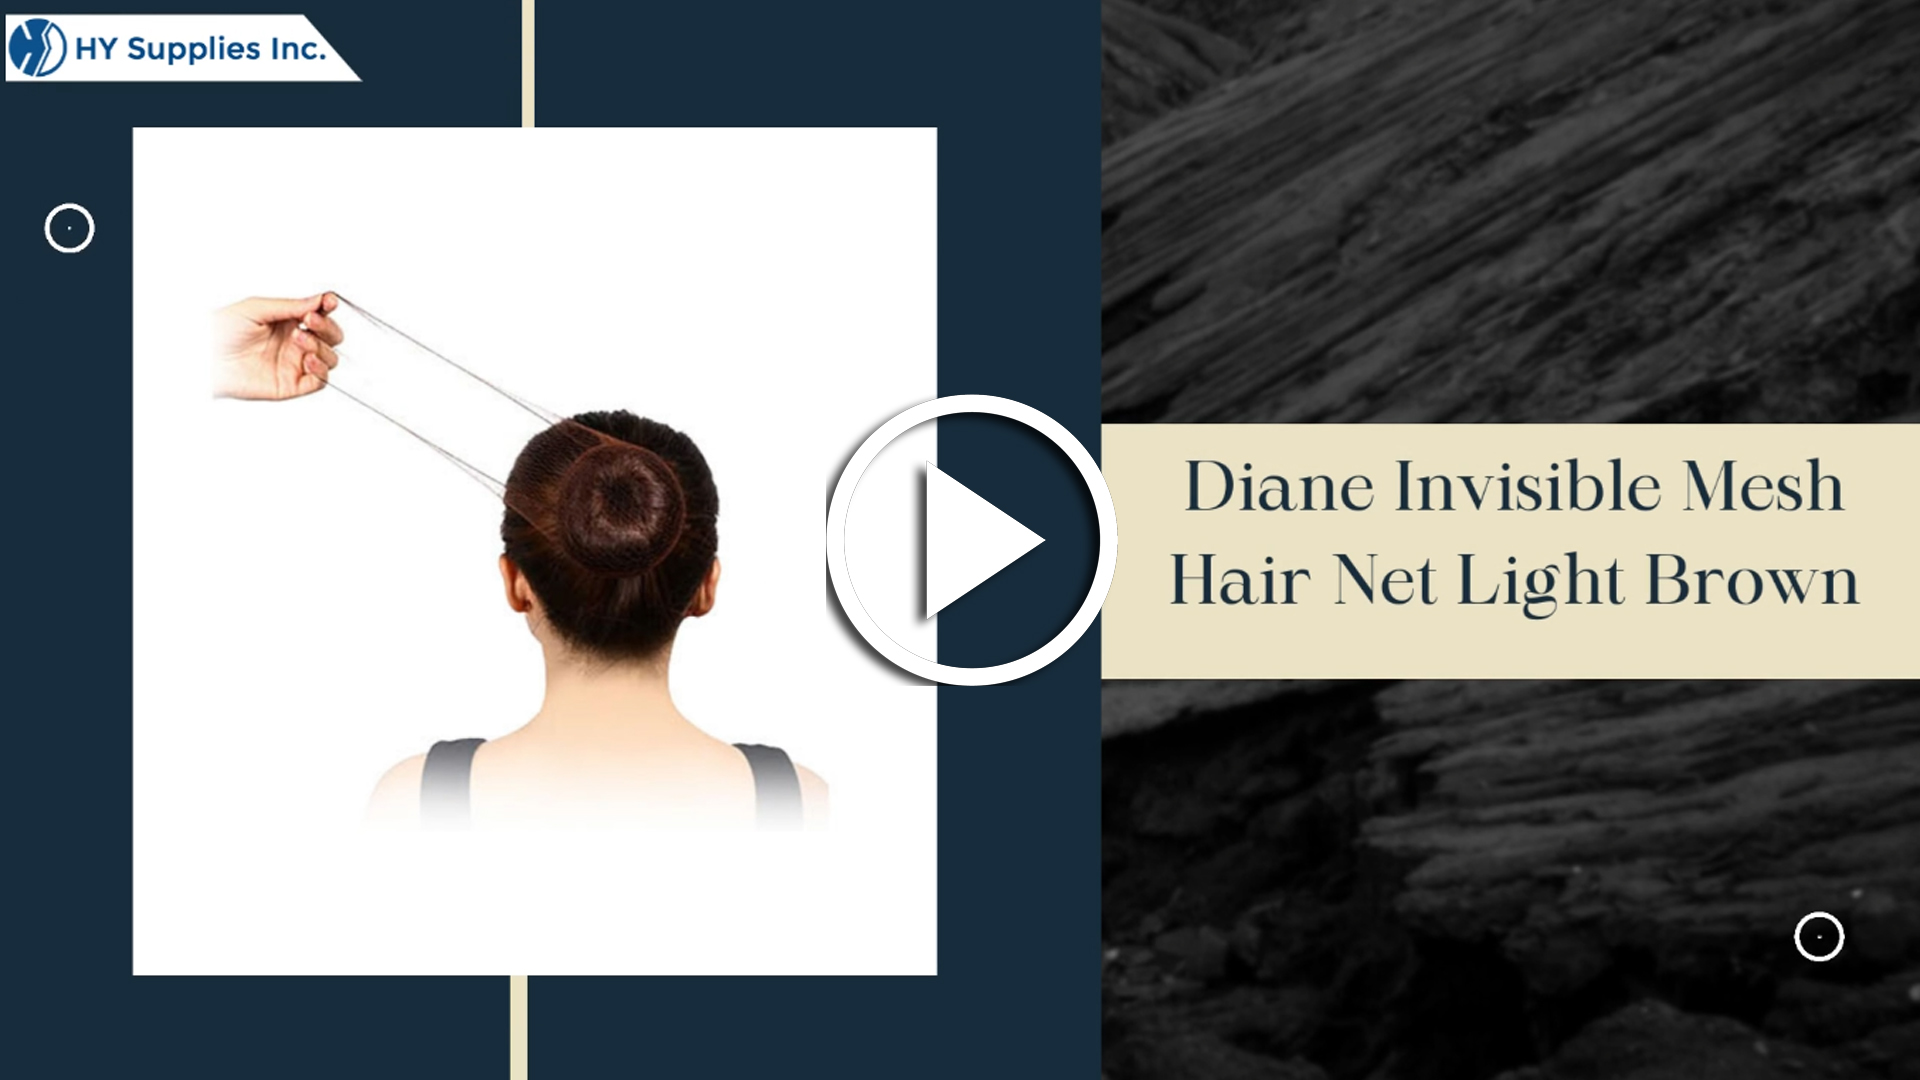 Diane Invisible Mesh Hair Net Light Brown